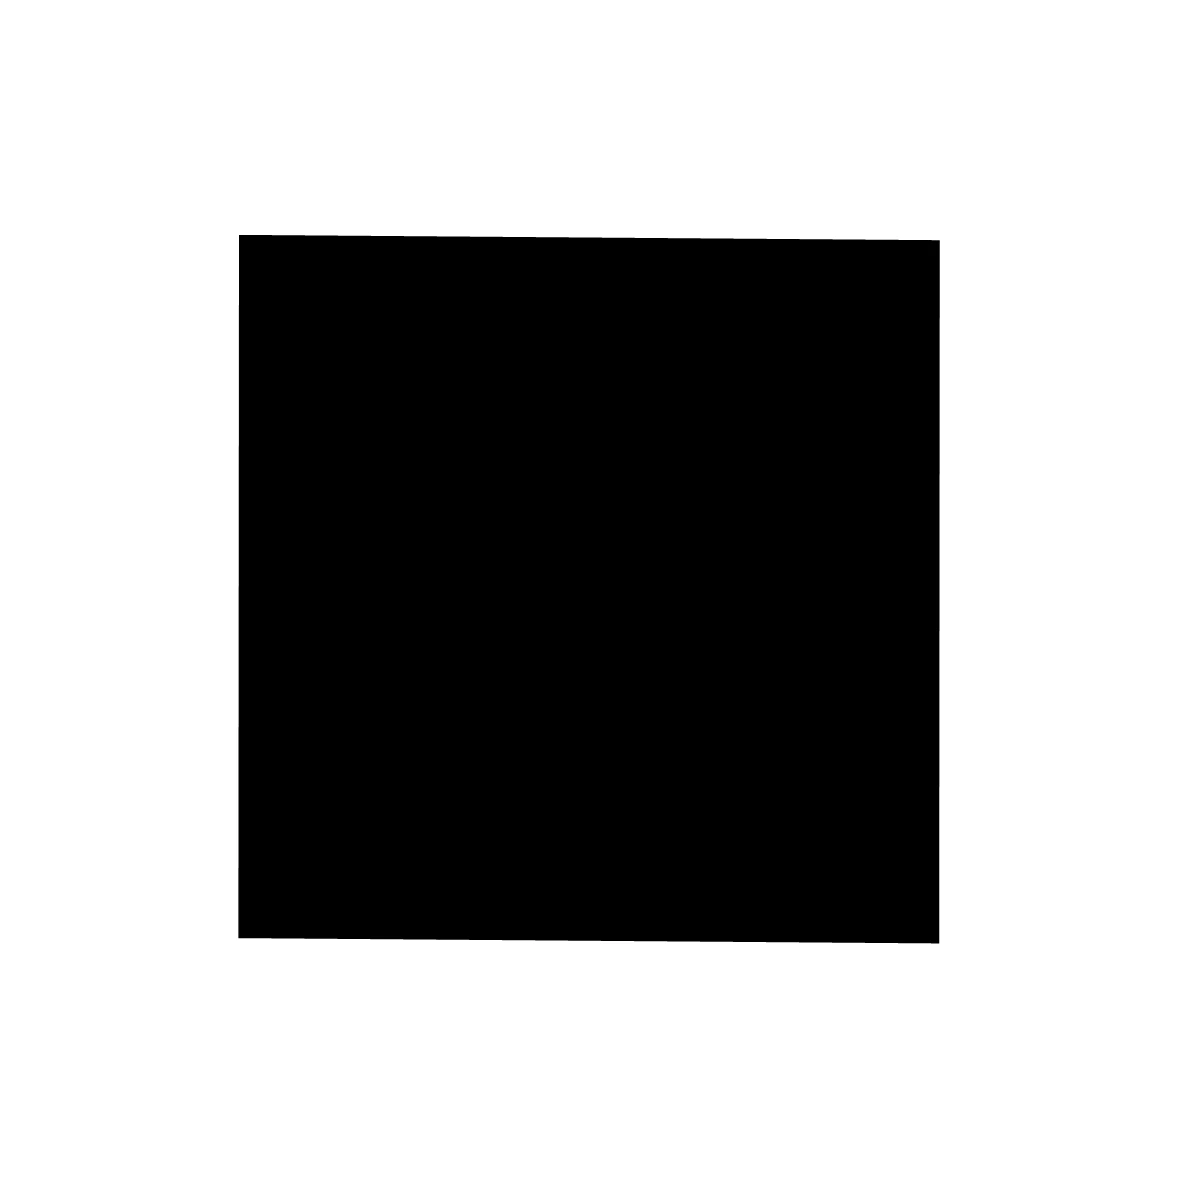 Moosgummidichtung vierkant | 25 mm Höhe | Farbe: schwarz